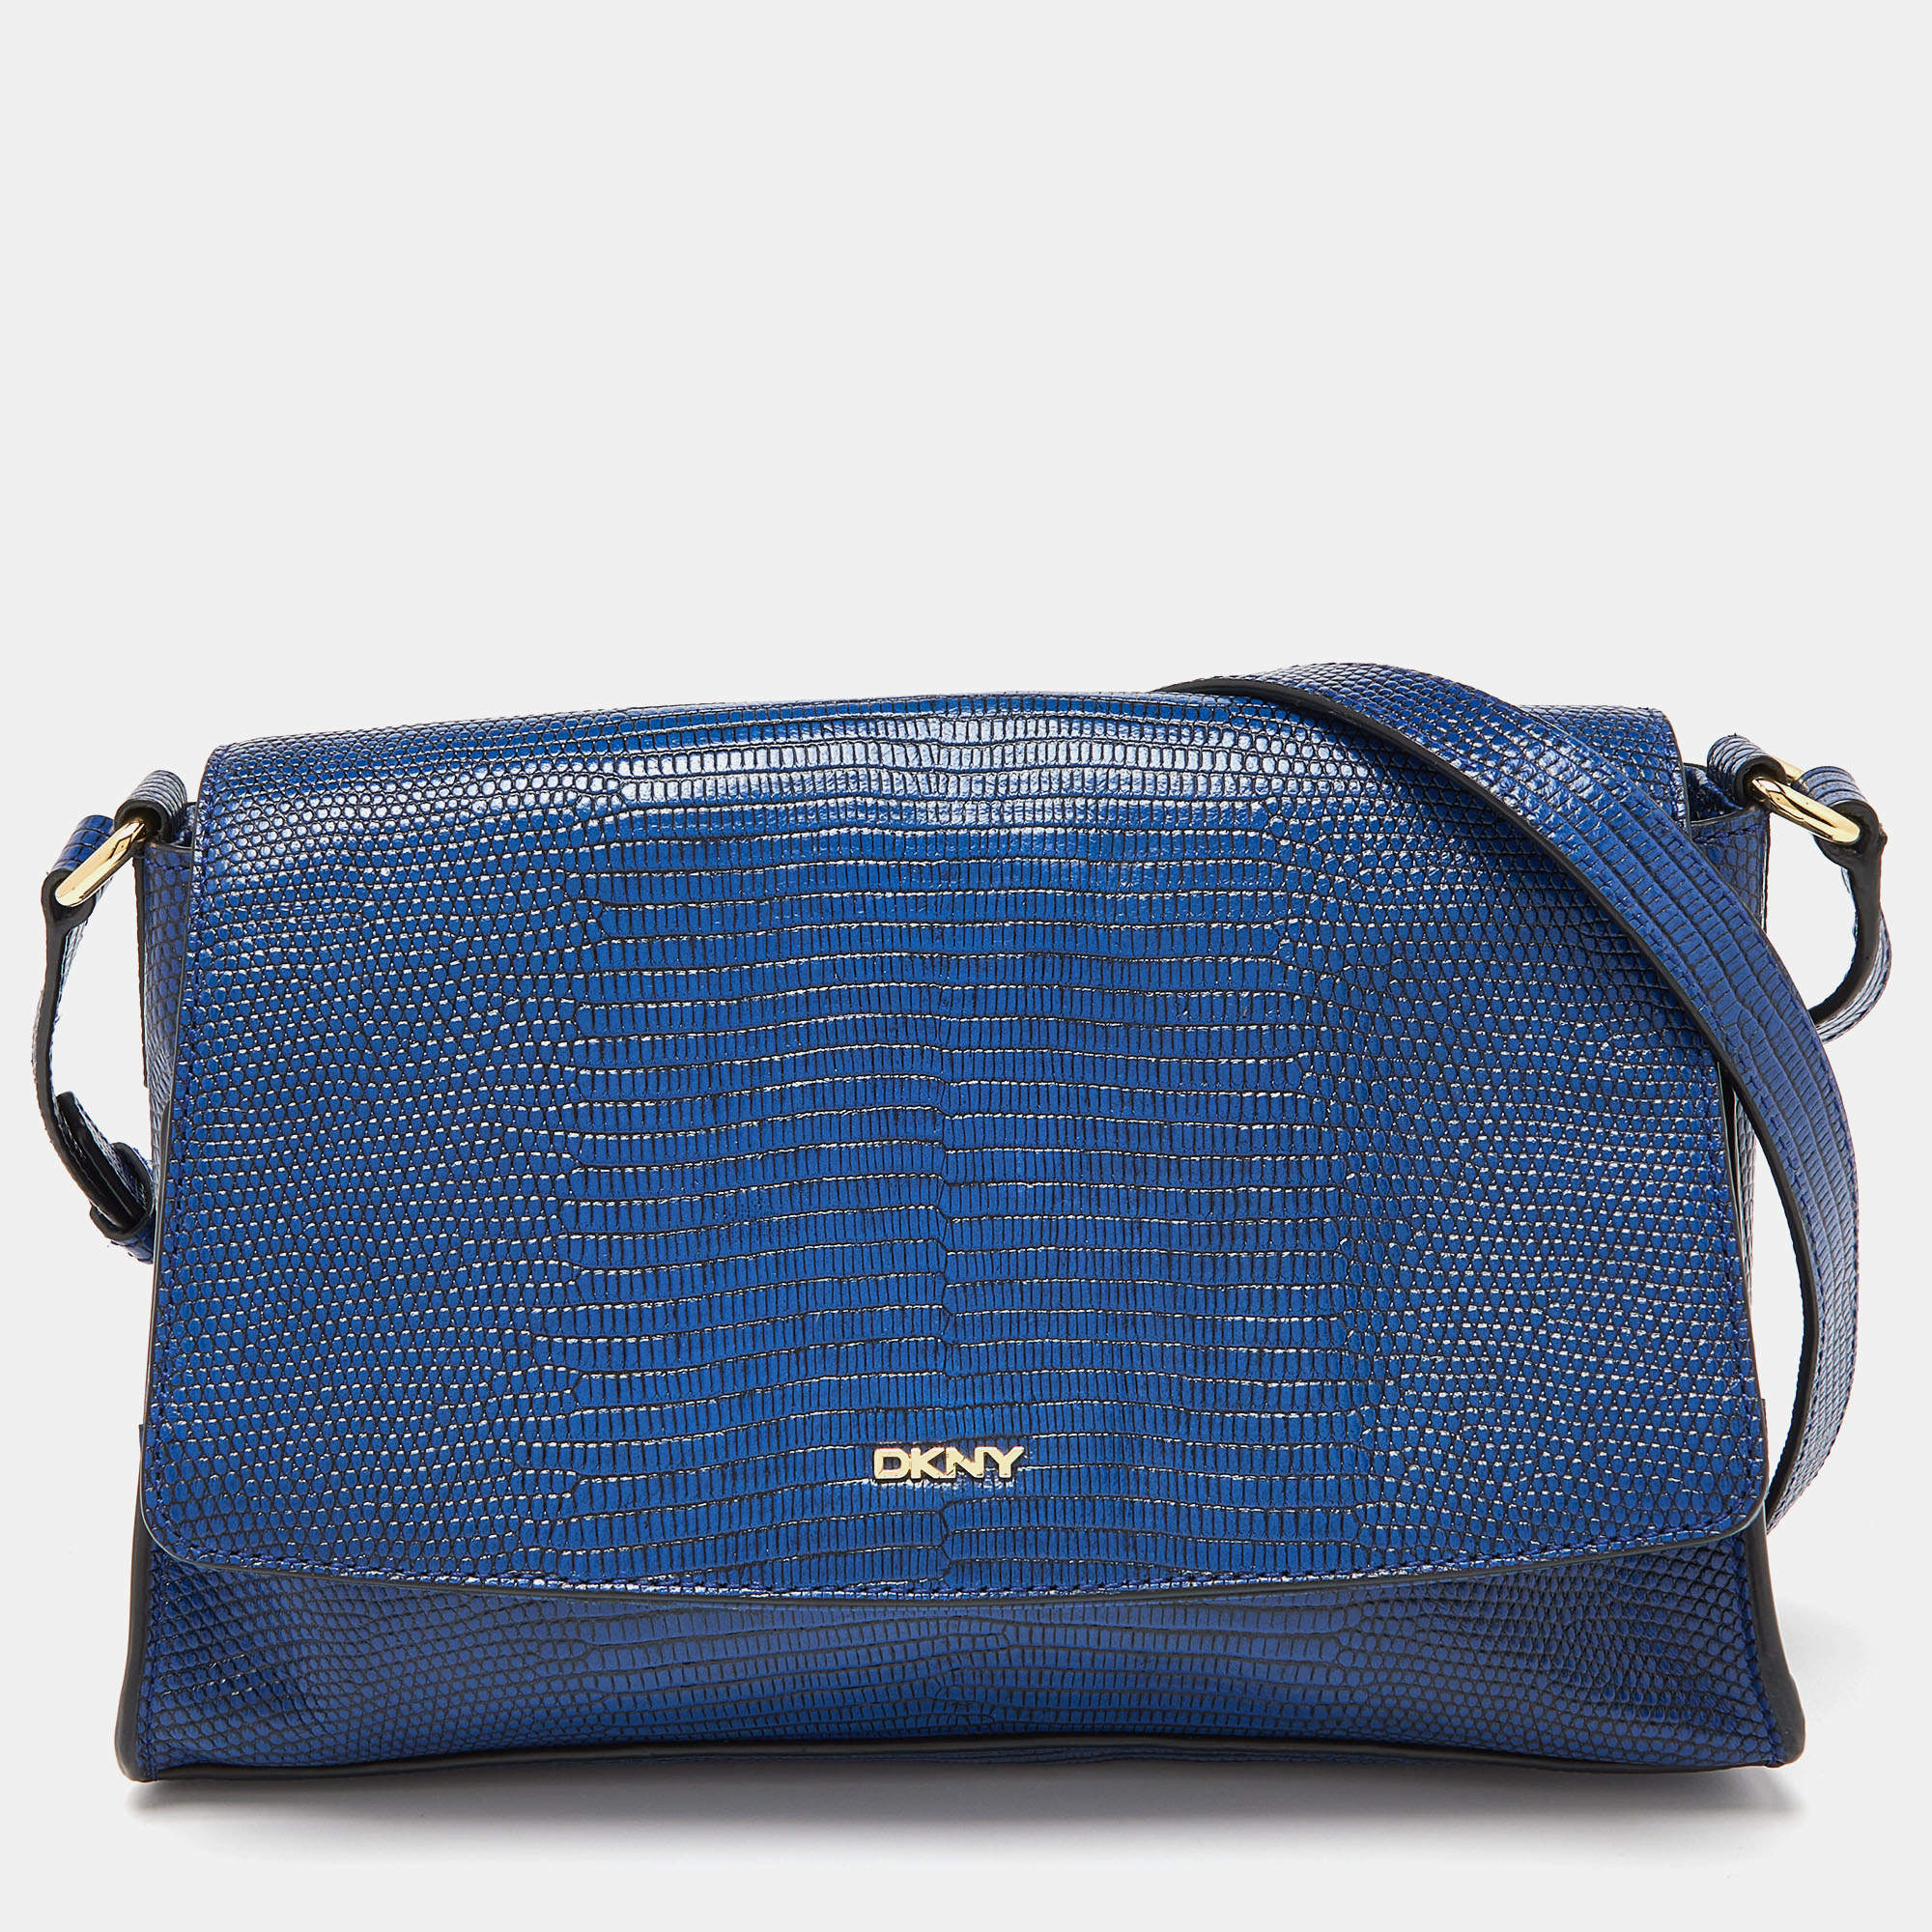 DKNY Bags in Blue